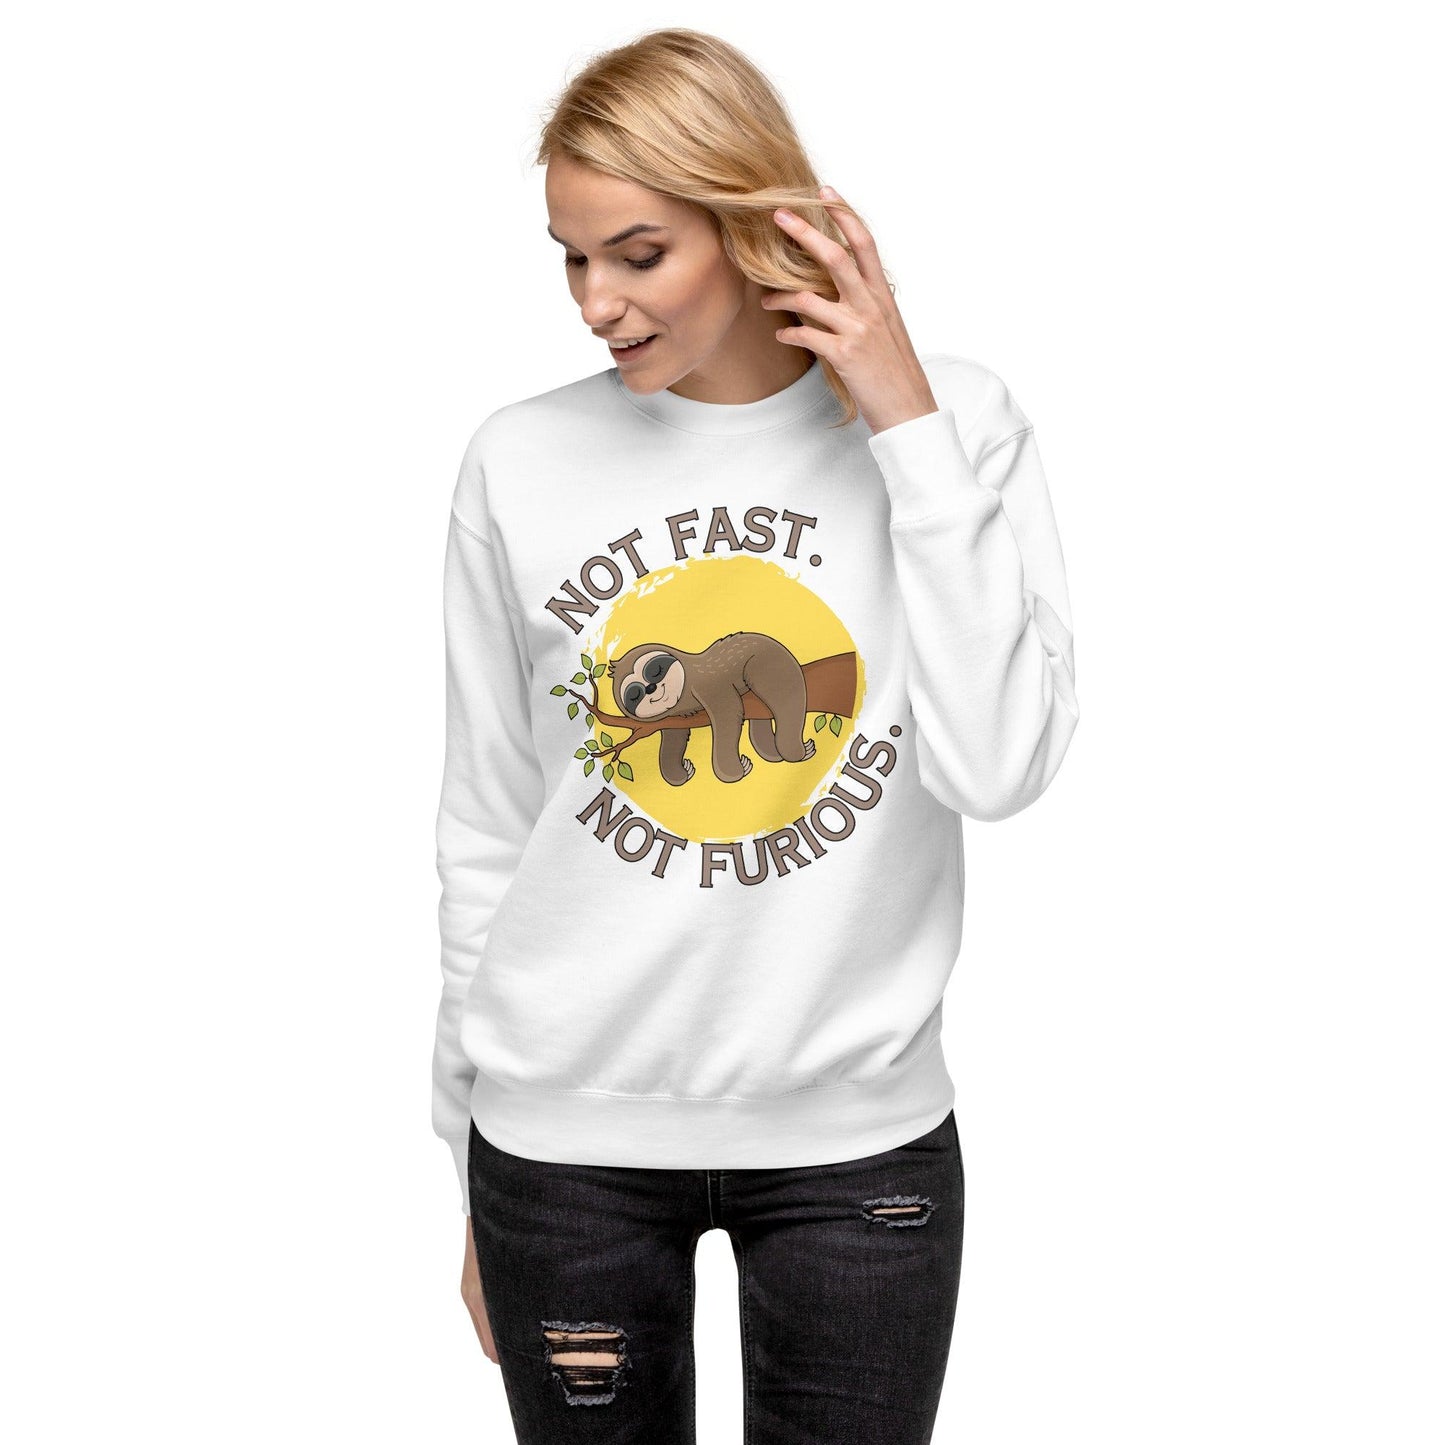 Premium Crew Sweatshirt - Not Fast Not Furious